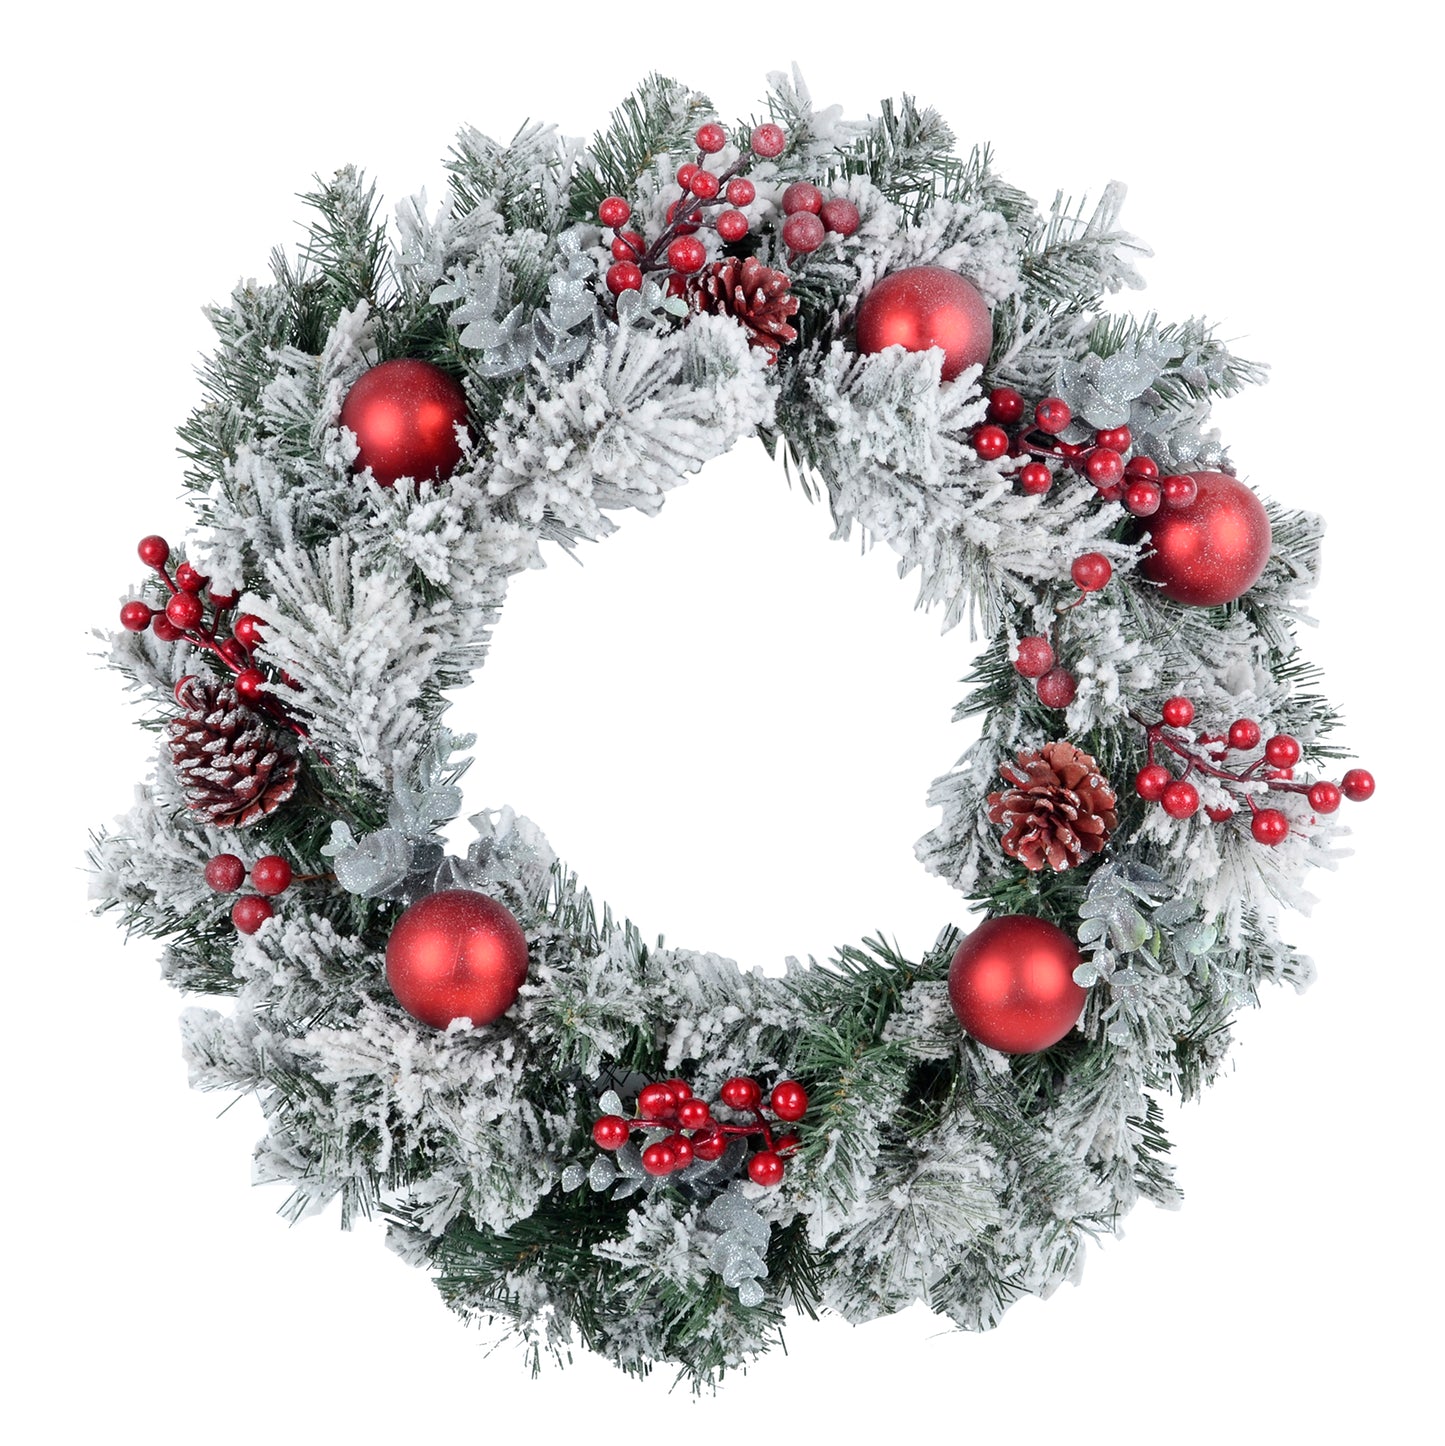 Mr Crimbo Snow Flocked Christmas Wreath With Red Berries 24" - MrCrimbo.co.uk -XS6435 - -24" wreath